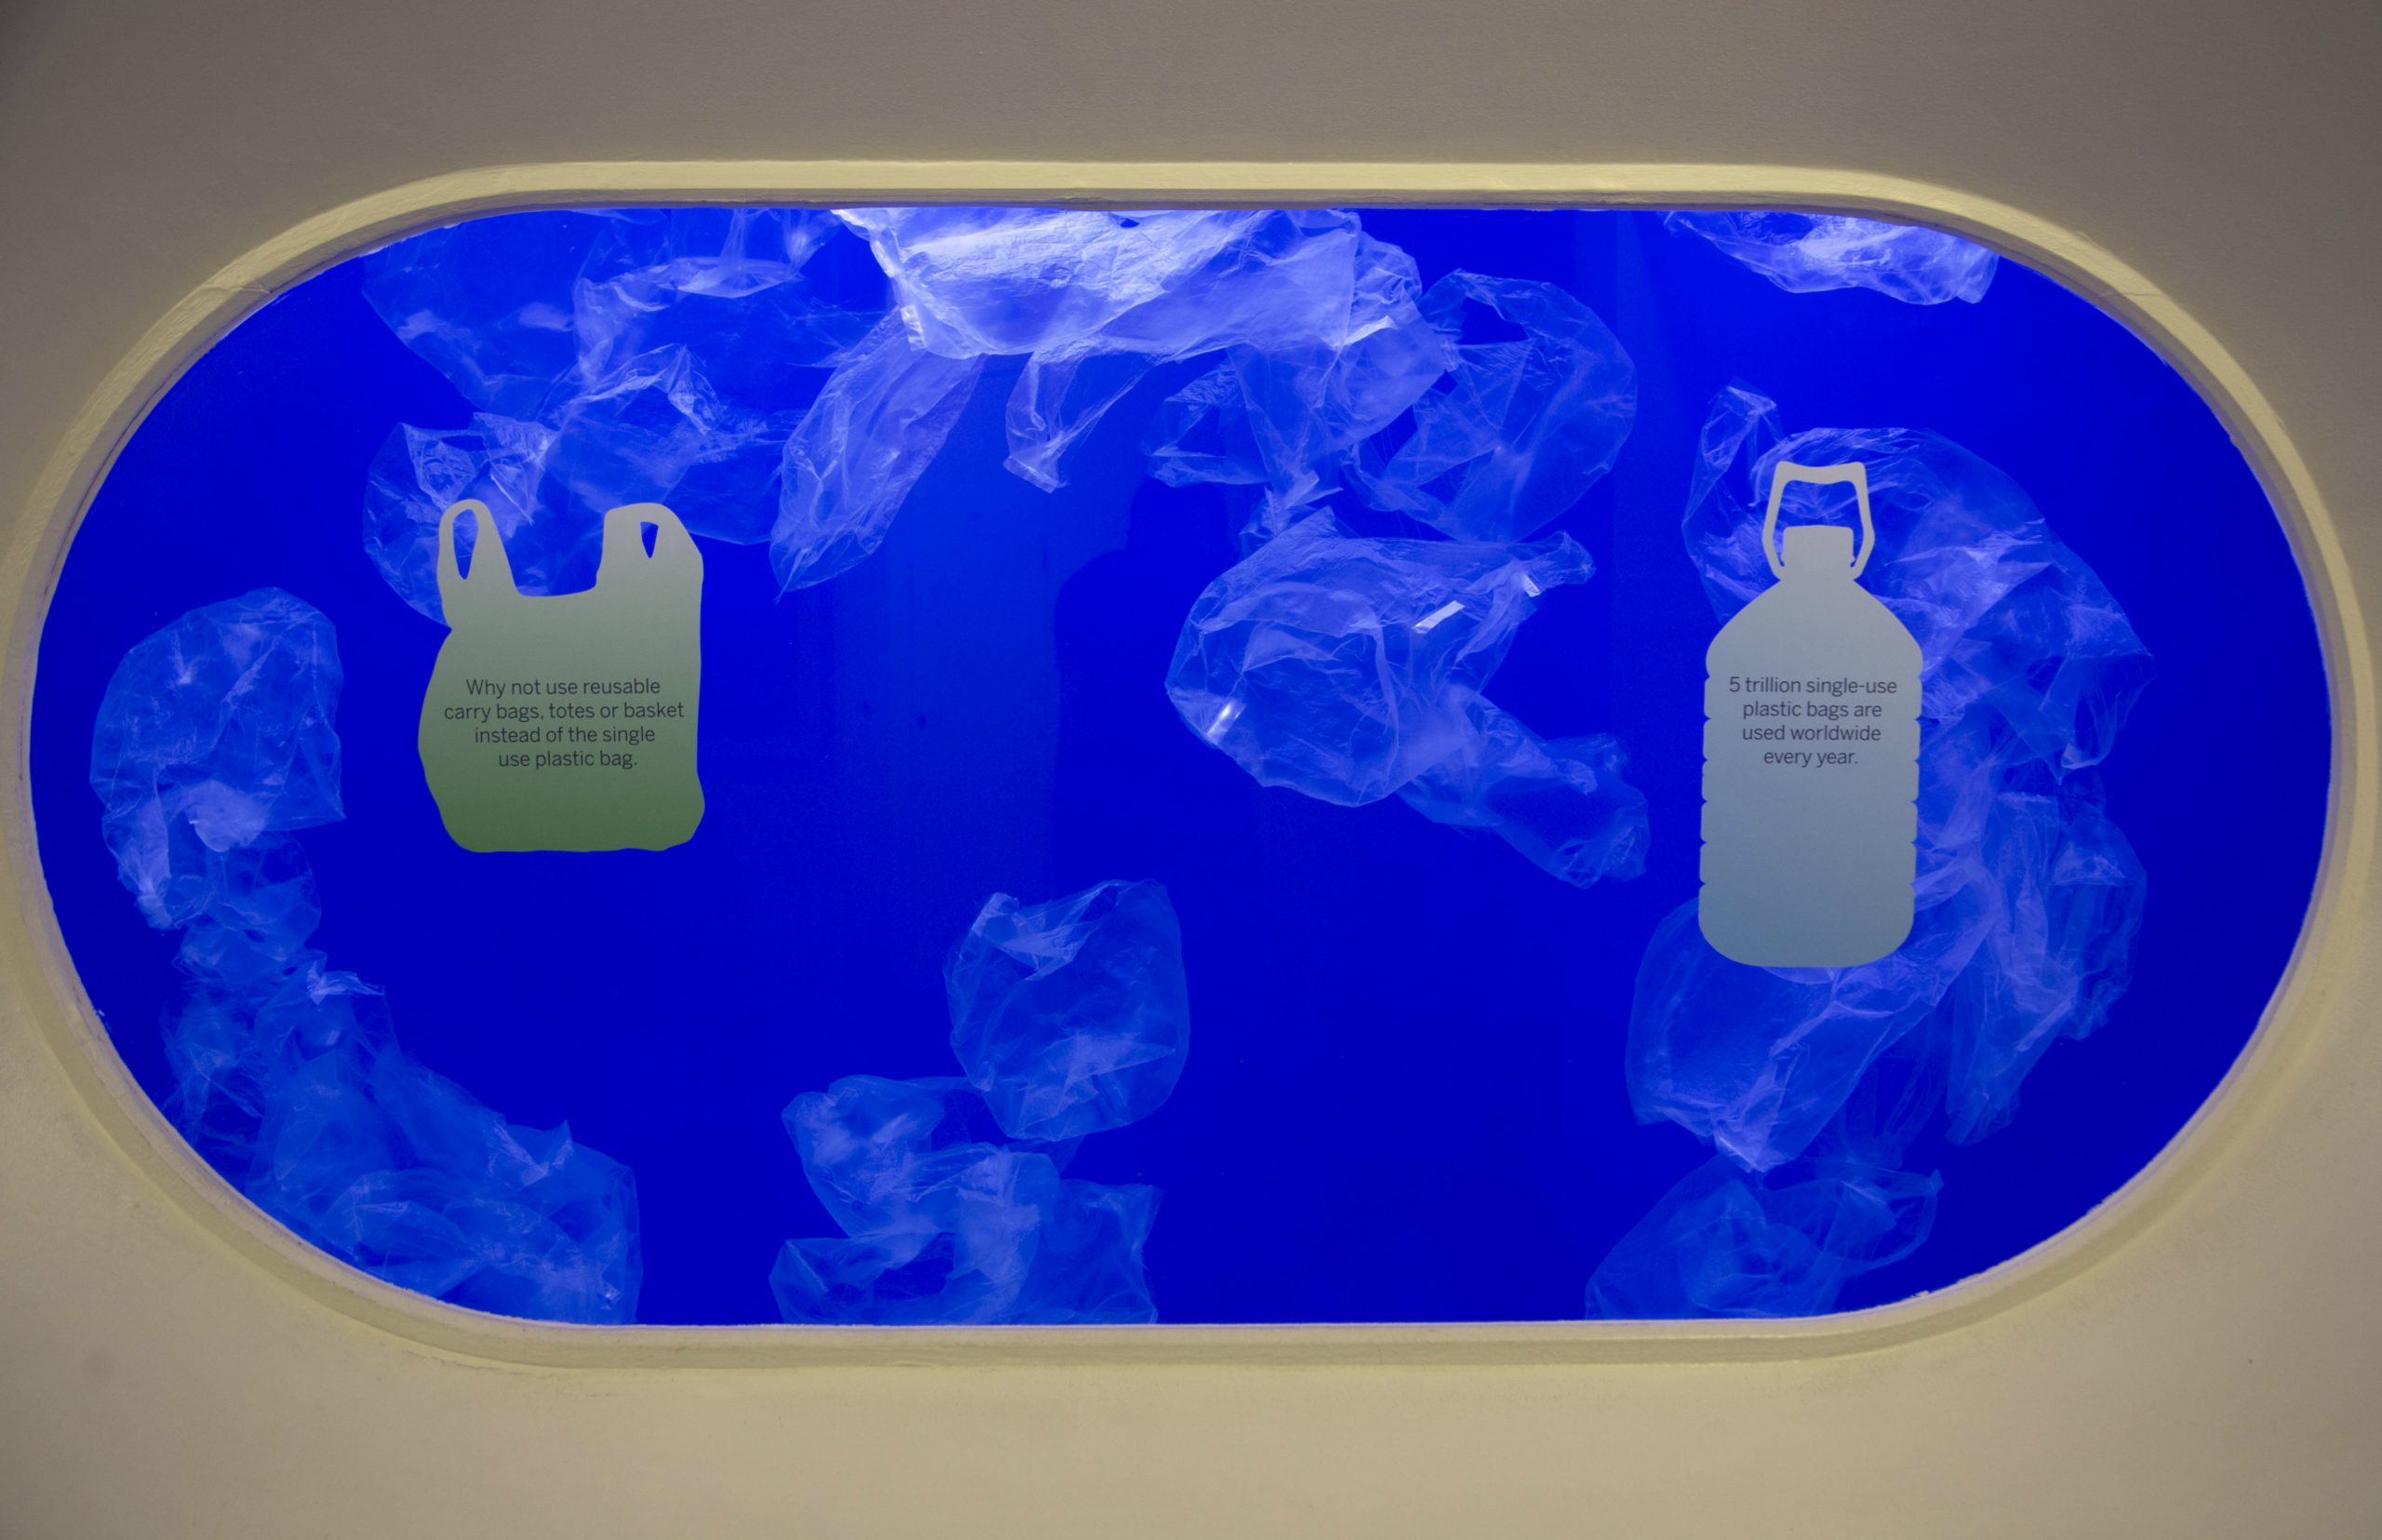 Plastic bags in the Horniman museum jellyfish tank.